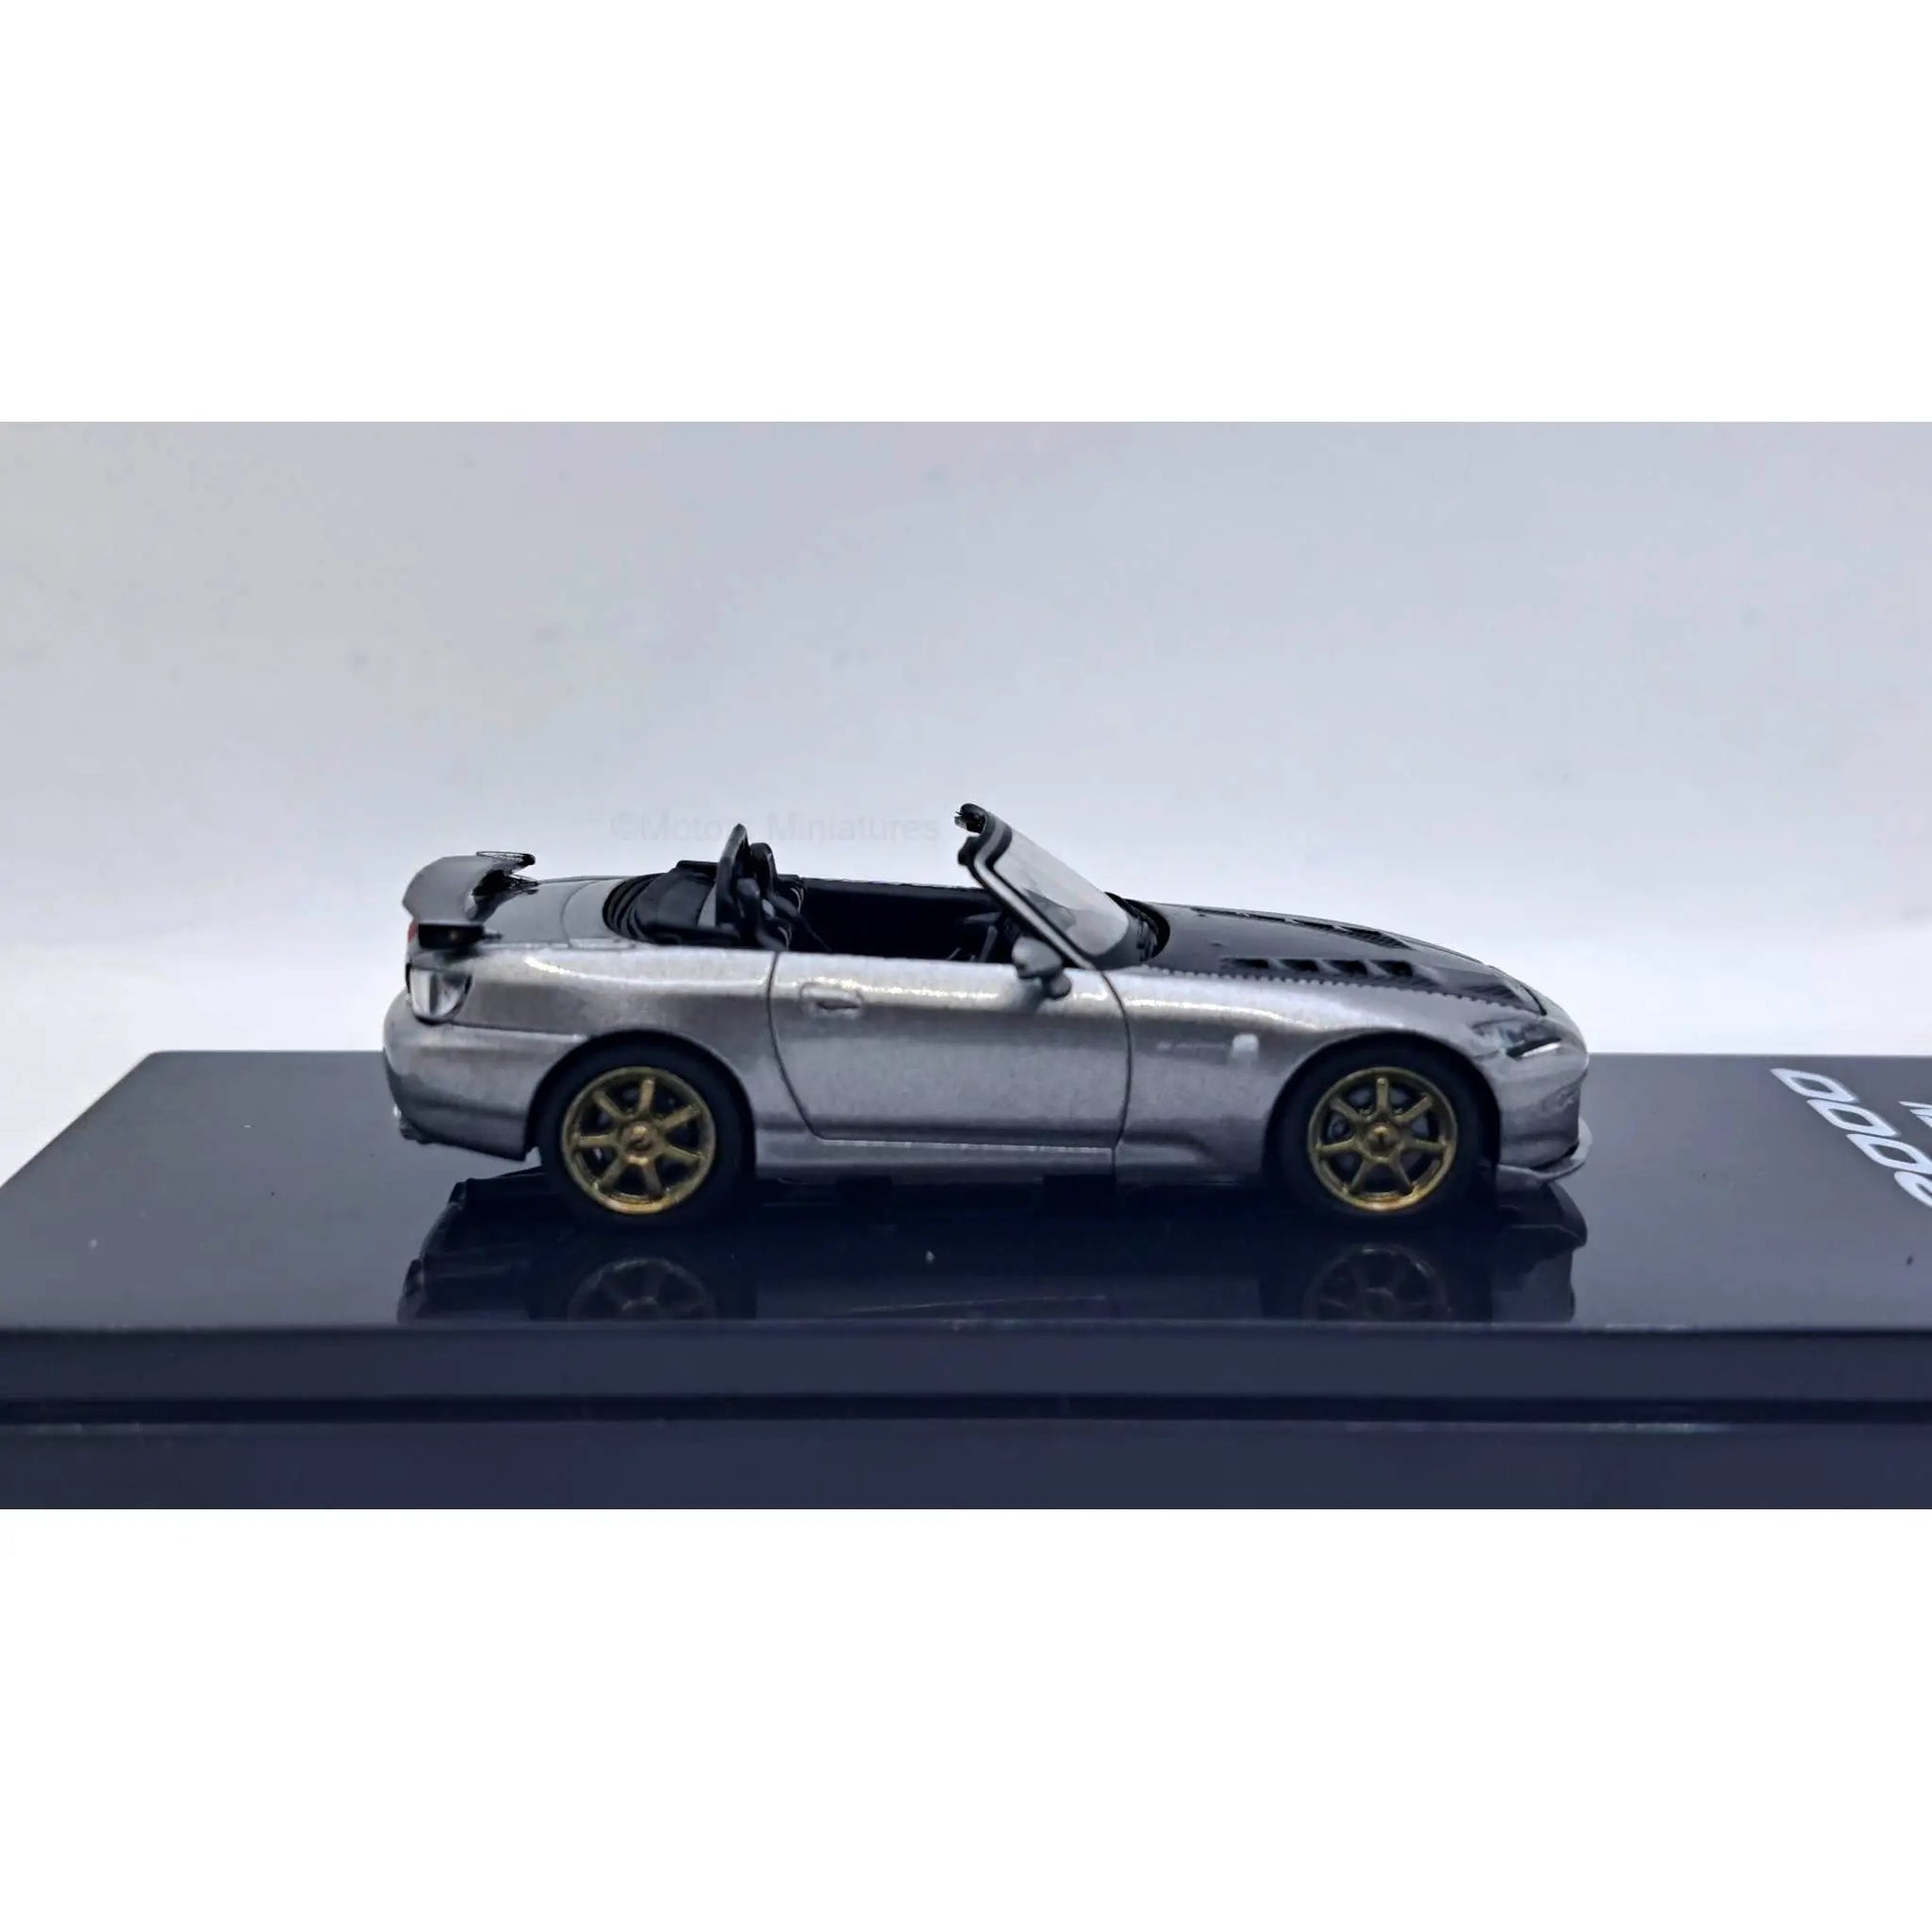 Scale 1/43 - Miniatures Autos Motos